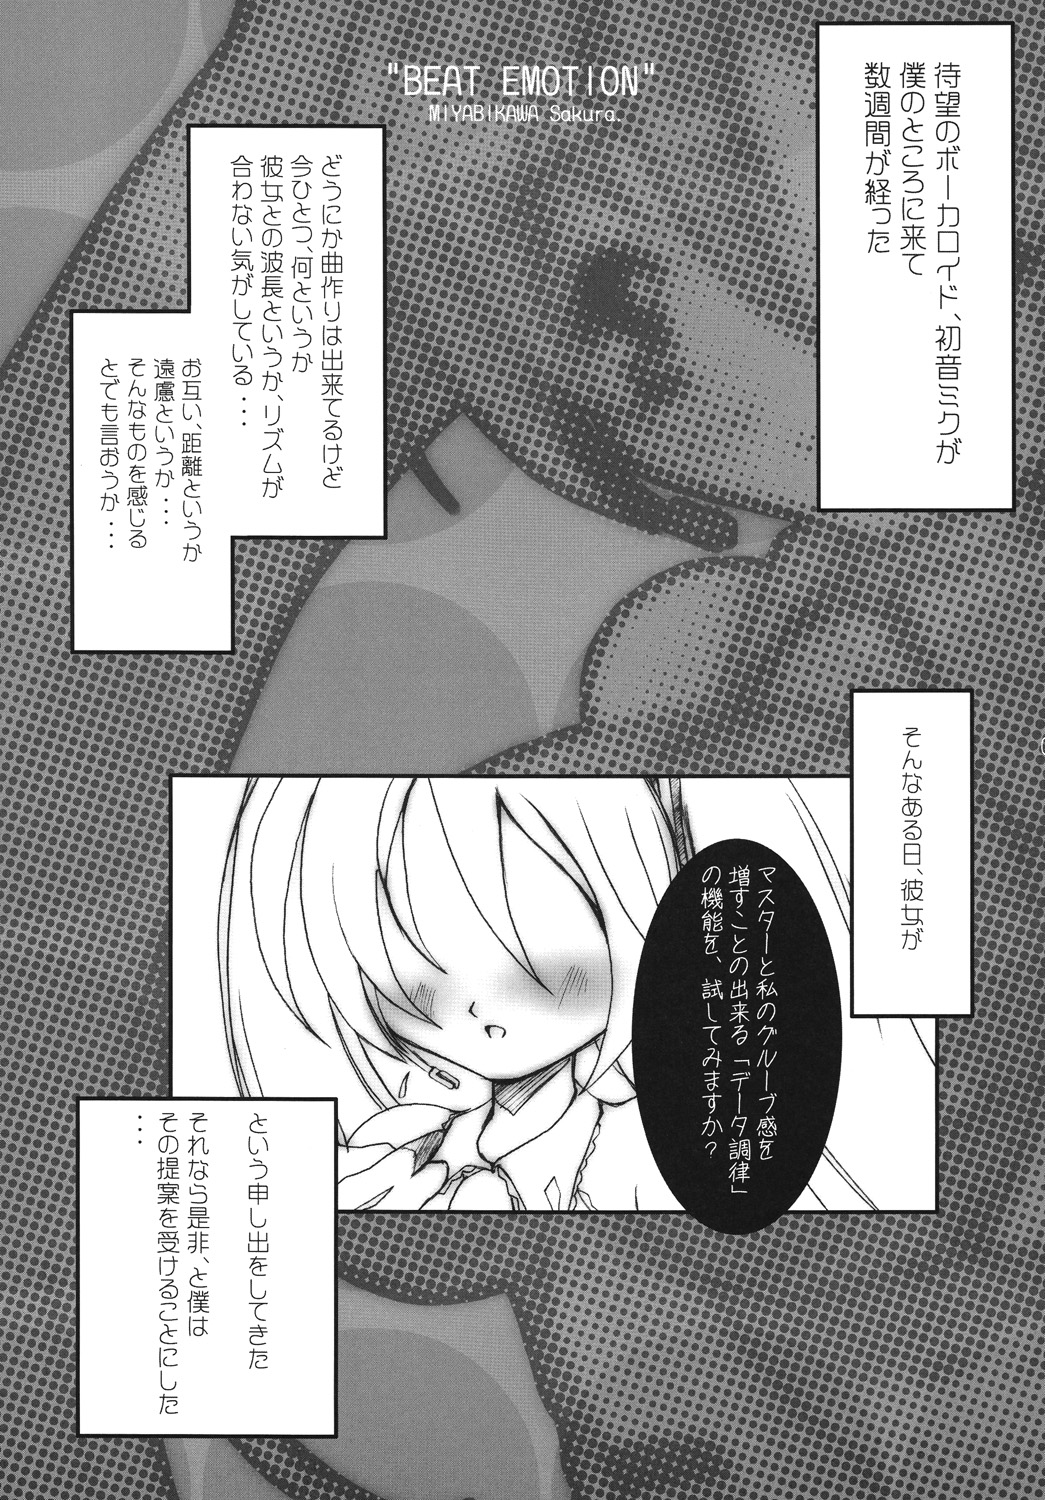 [yggdrasil (Miyabikawa Sakura)] BEAT EMOTION (Vocaloid) [イグドラシル (雅川佐倉)] BEAT EMOTION (初音ミク)